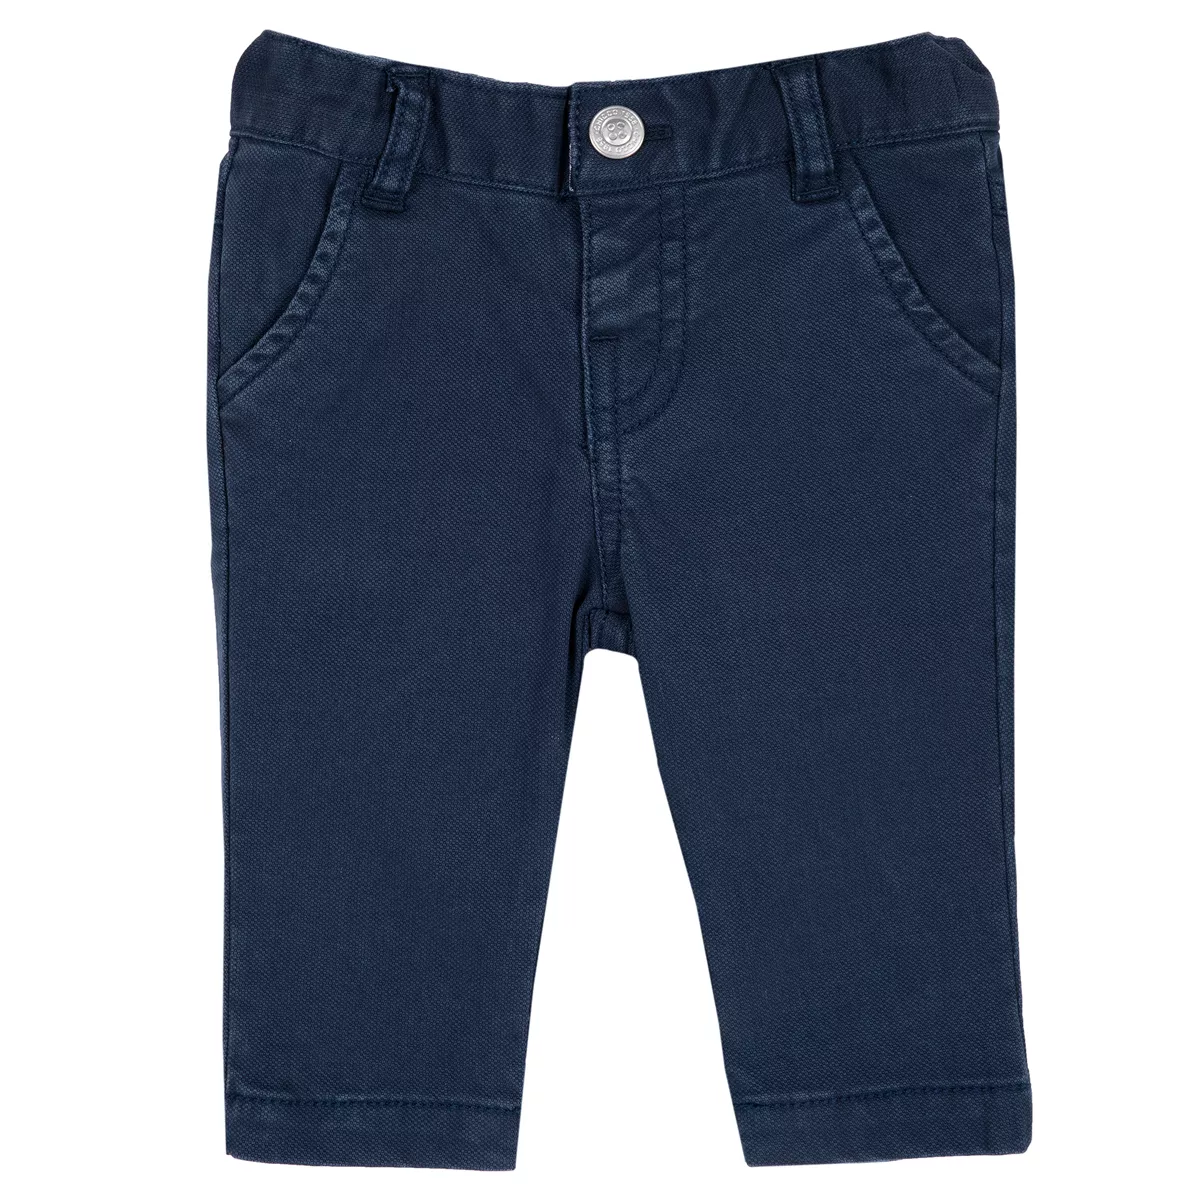 Pantalon lung Chicco, albastru inchis, 86